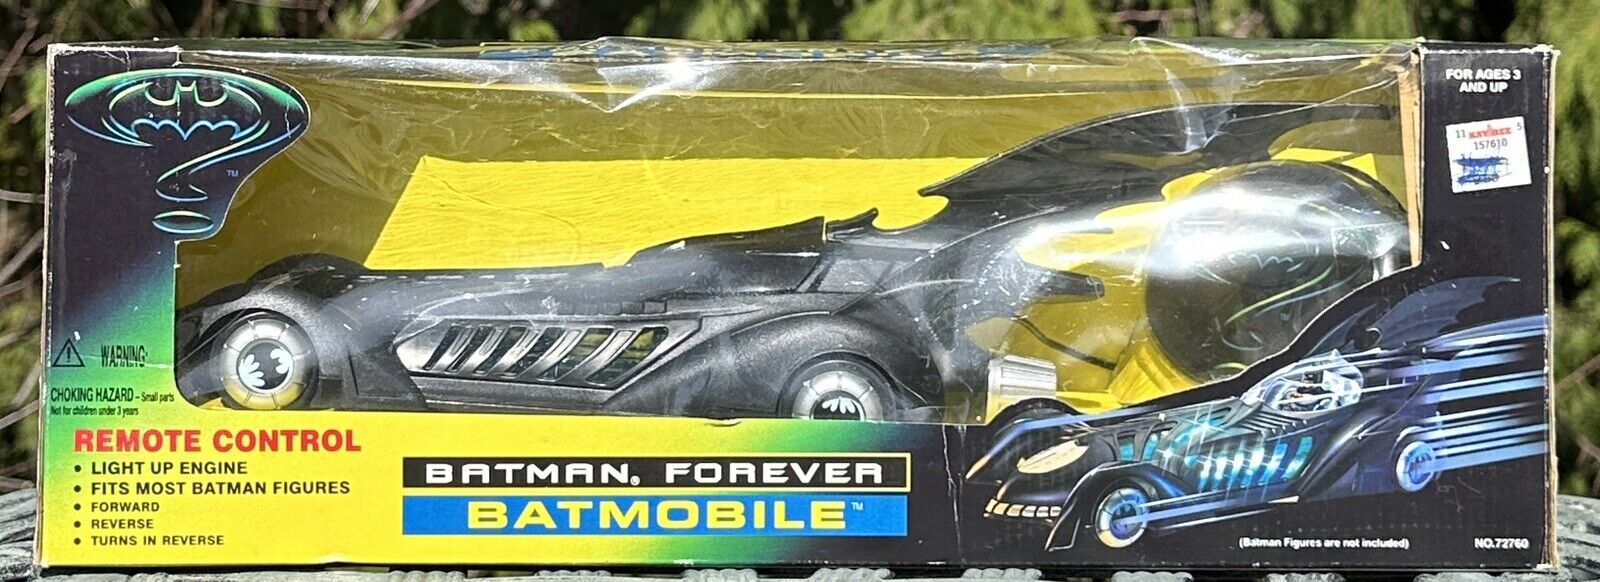 Vintage 1995 Batman Forever Batmobile RC Remote Control Open Box Kay-Bee Toys